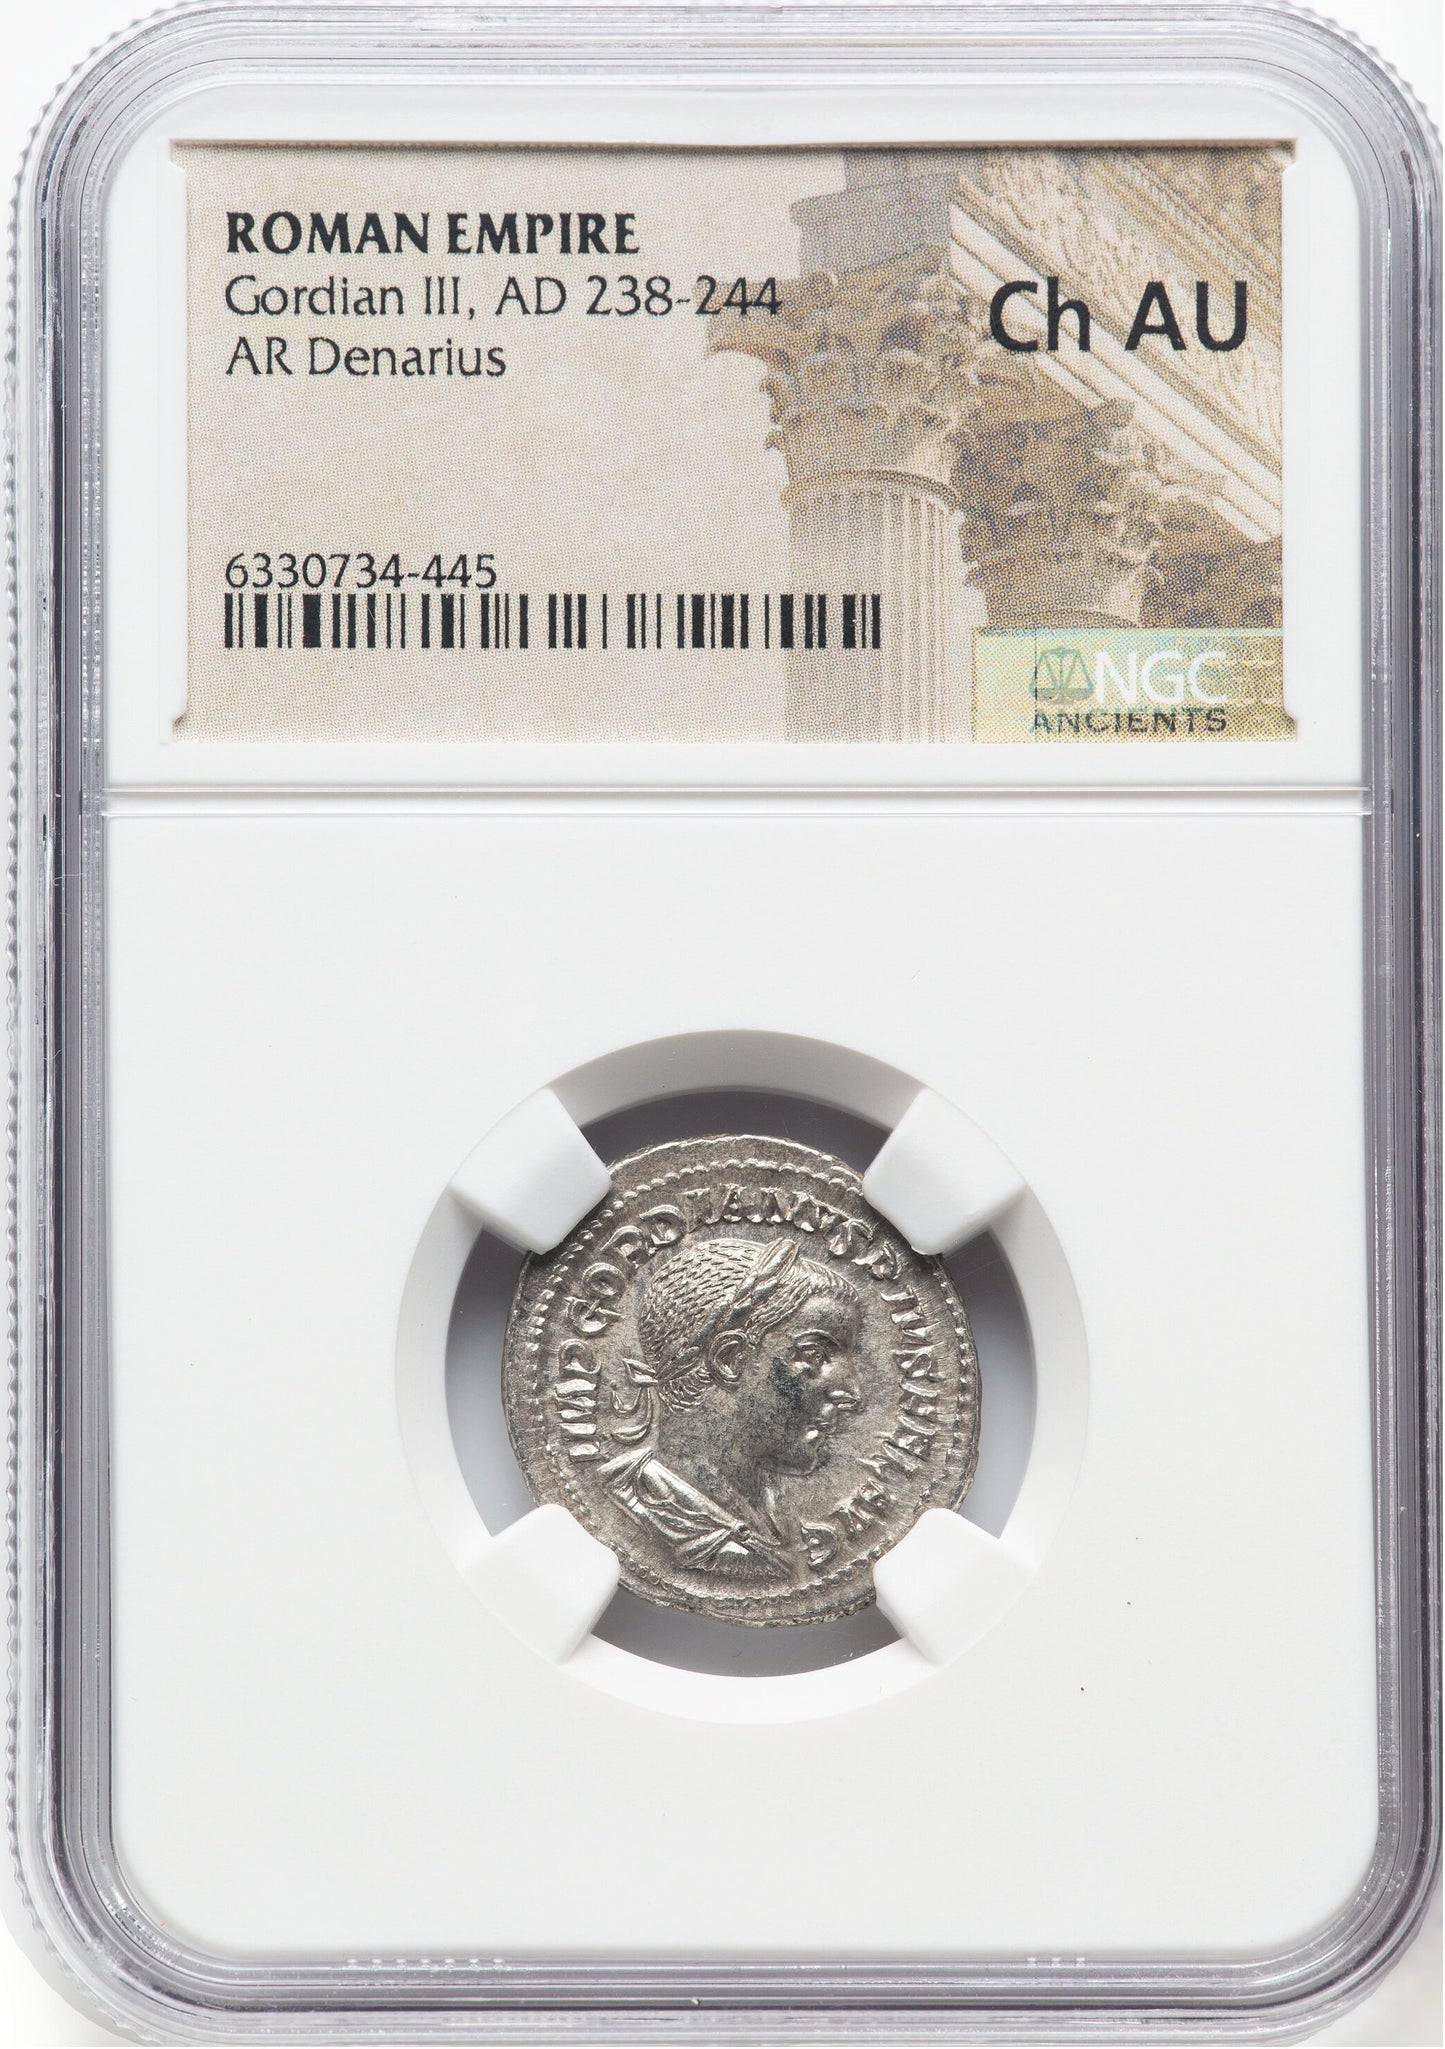 Roman Empire - Gordian III - Silver Denarius - NGC Ch AU